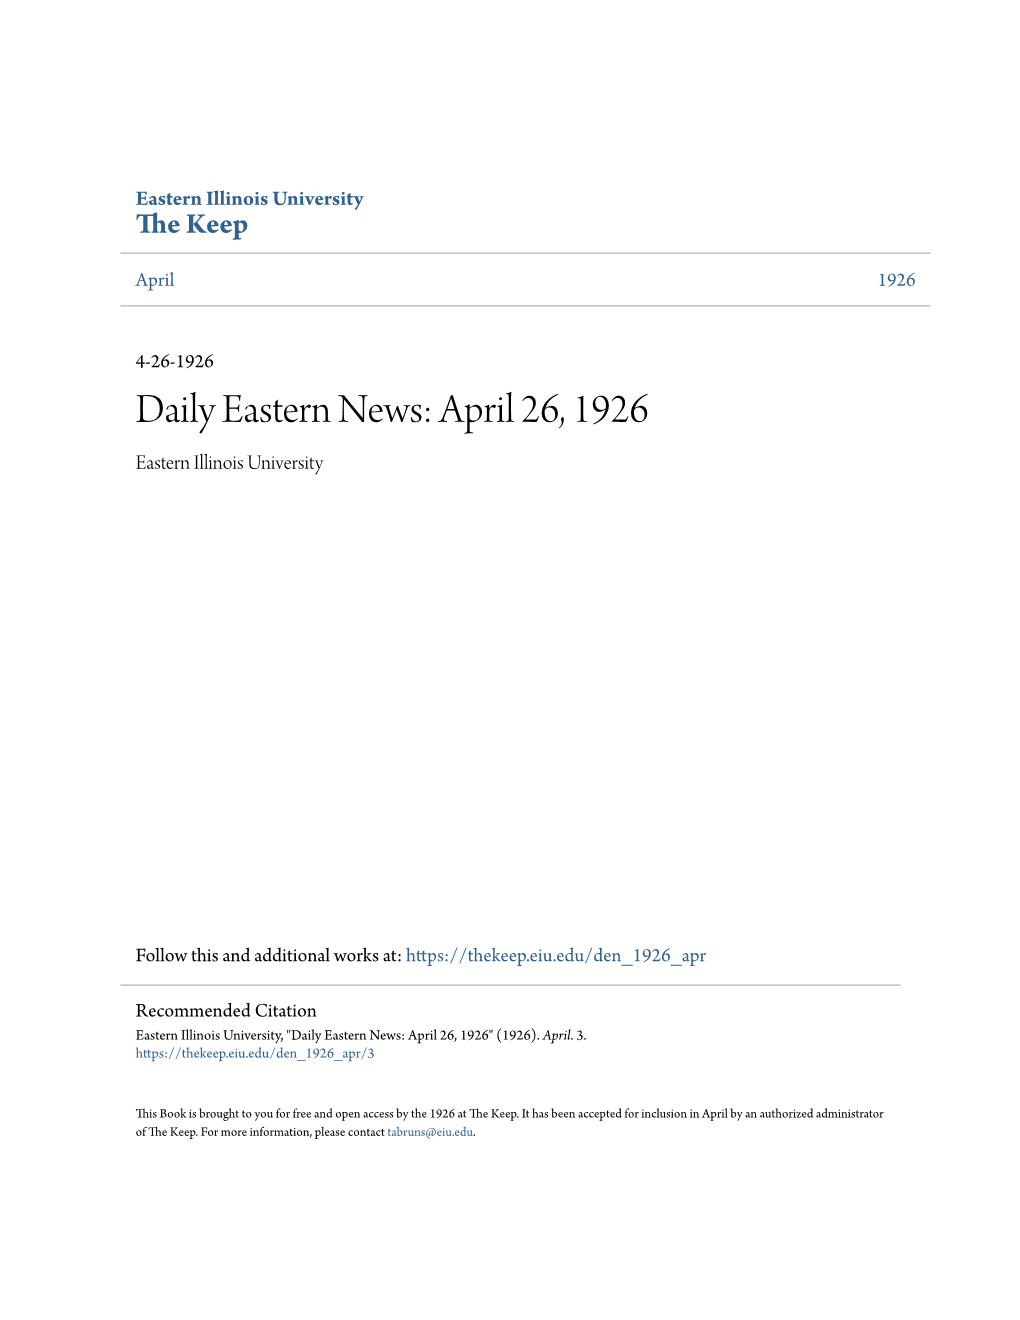 Daily Eastern News: April 26, 1926 Eastern Illinois University